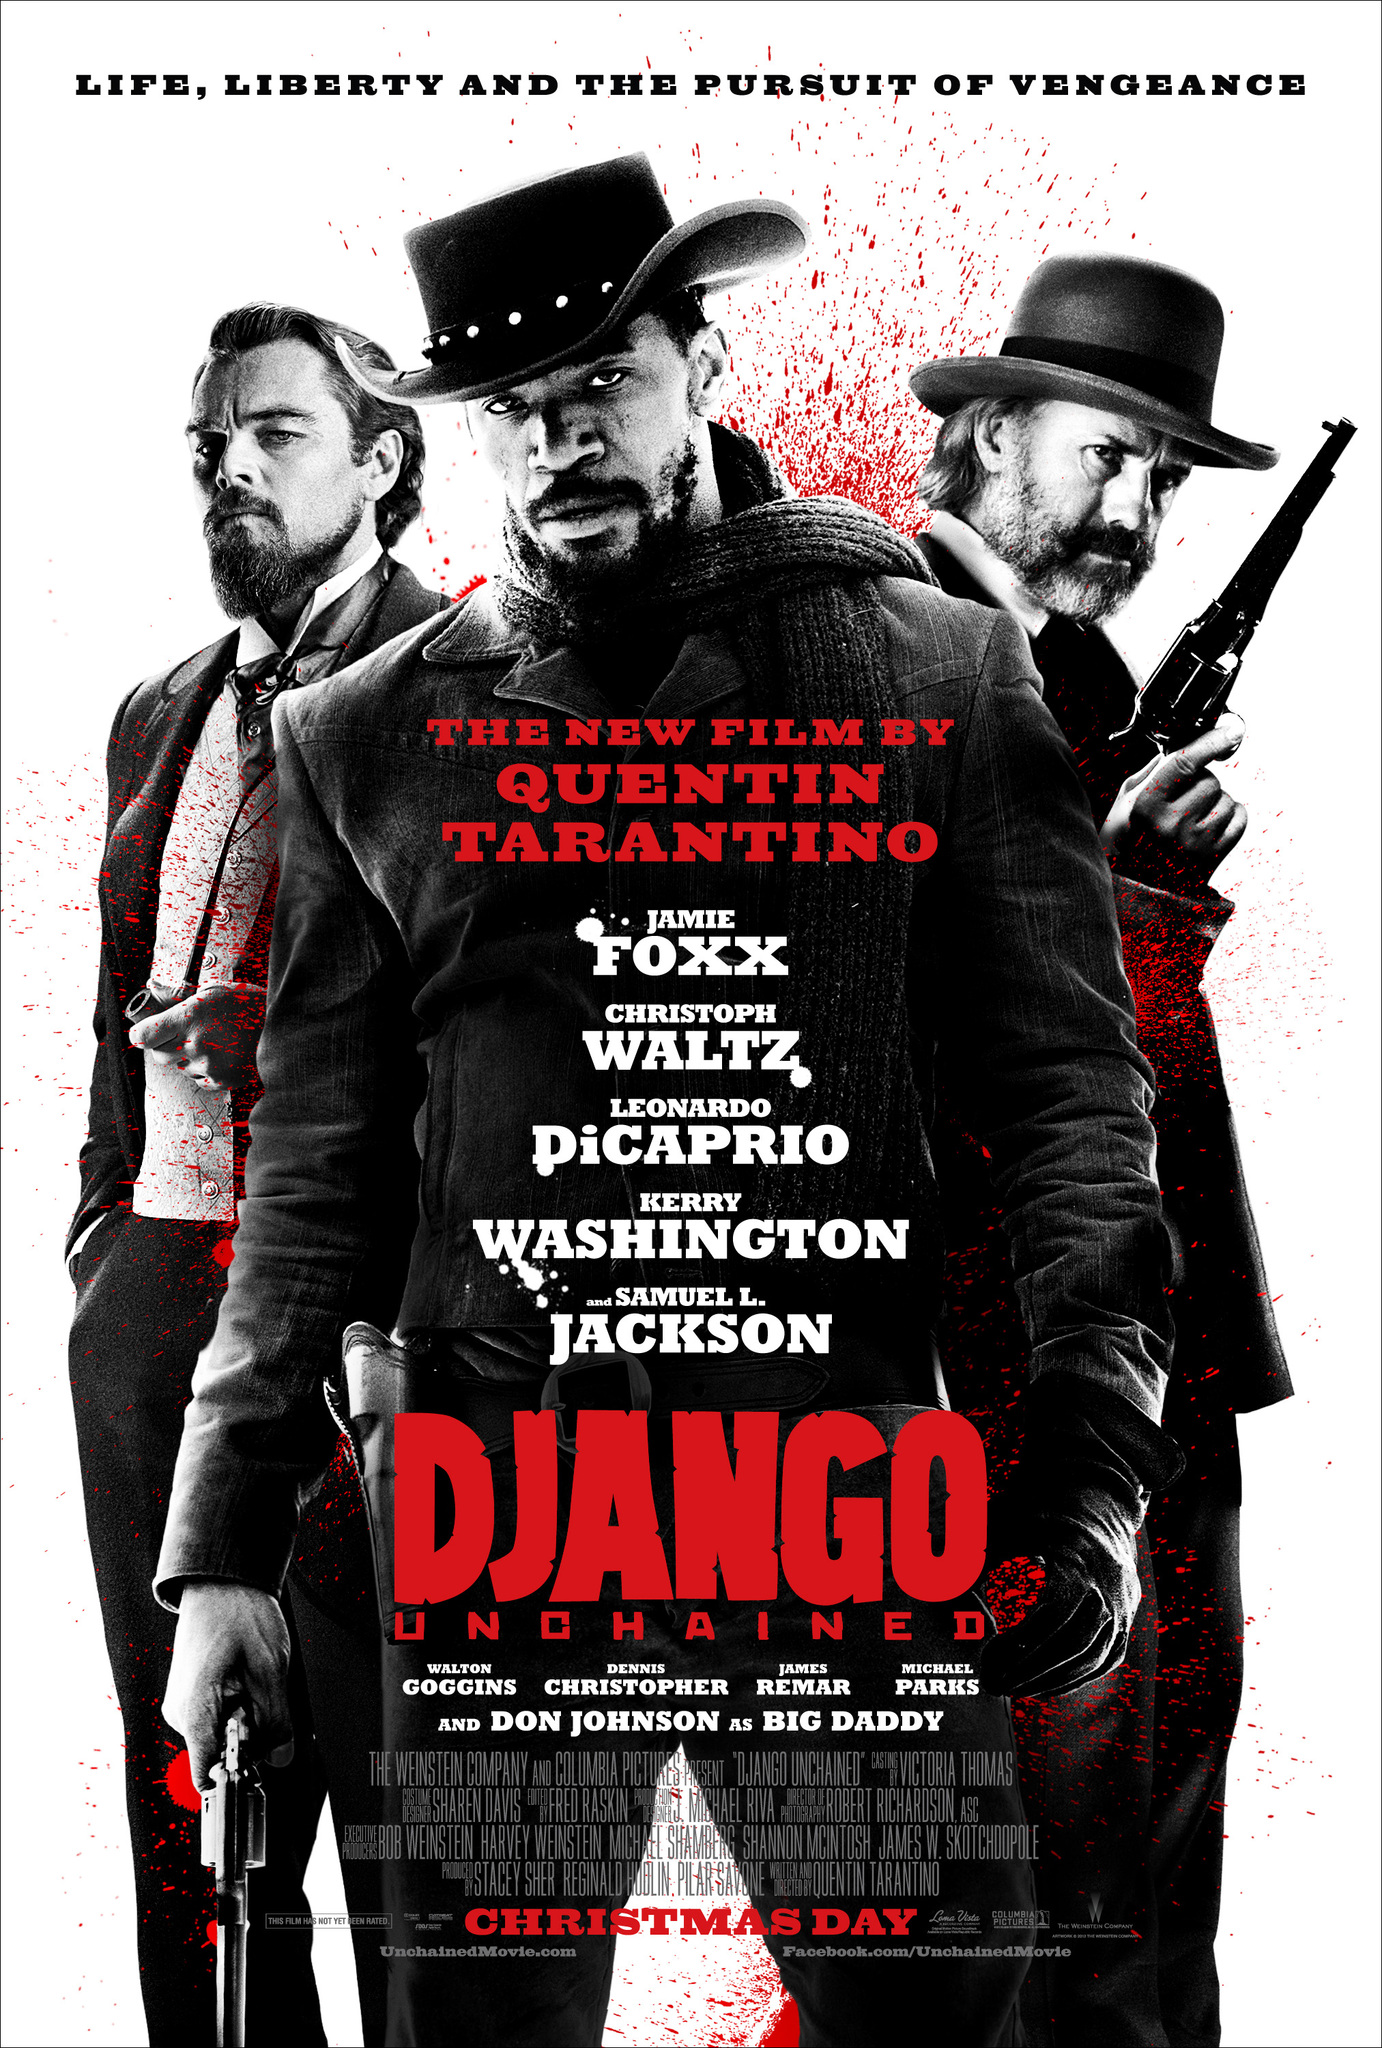 Django Unchained 2012 INTERNAL DVDRip XviD AC3 iND